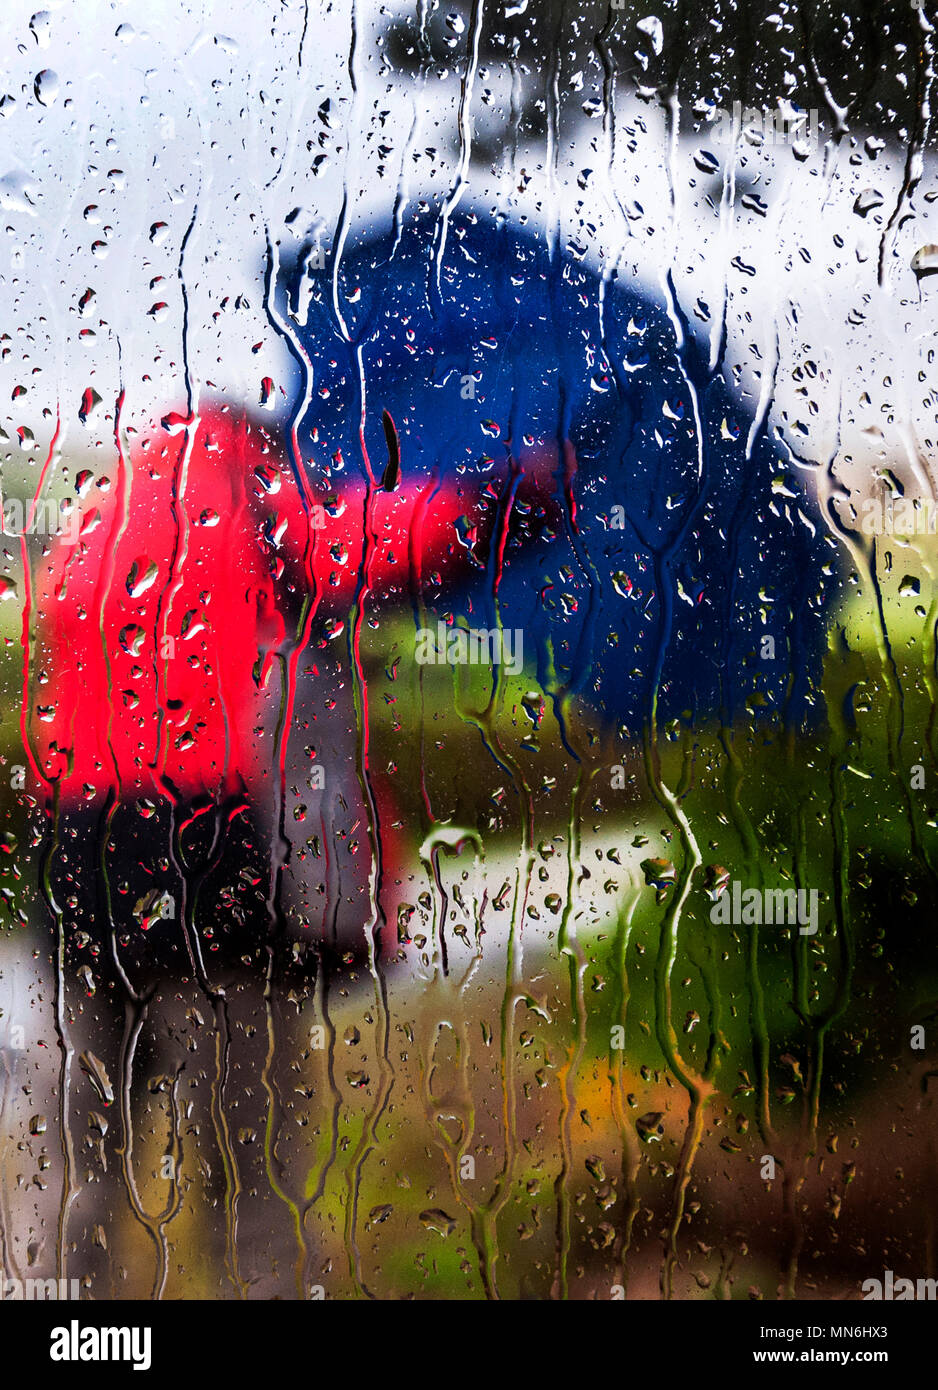 Rainy and windy day concept shot through rain spattered window pane Stock Photo